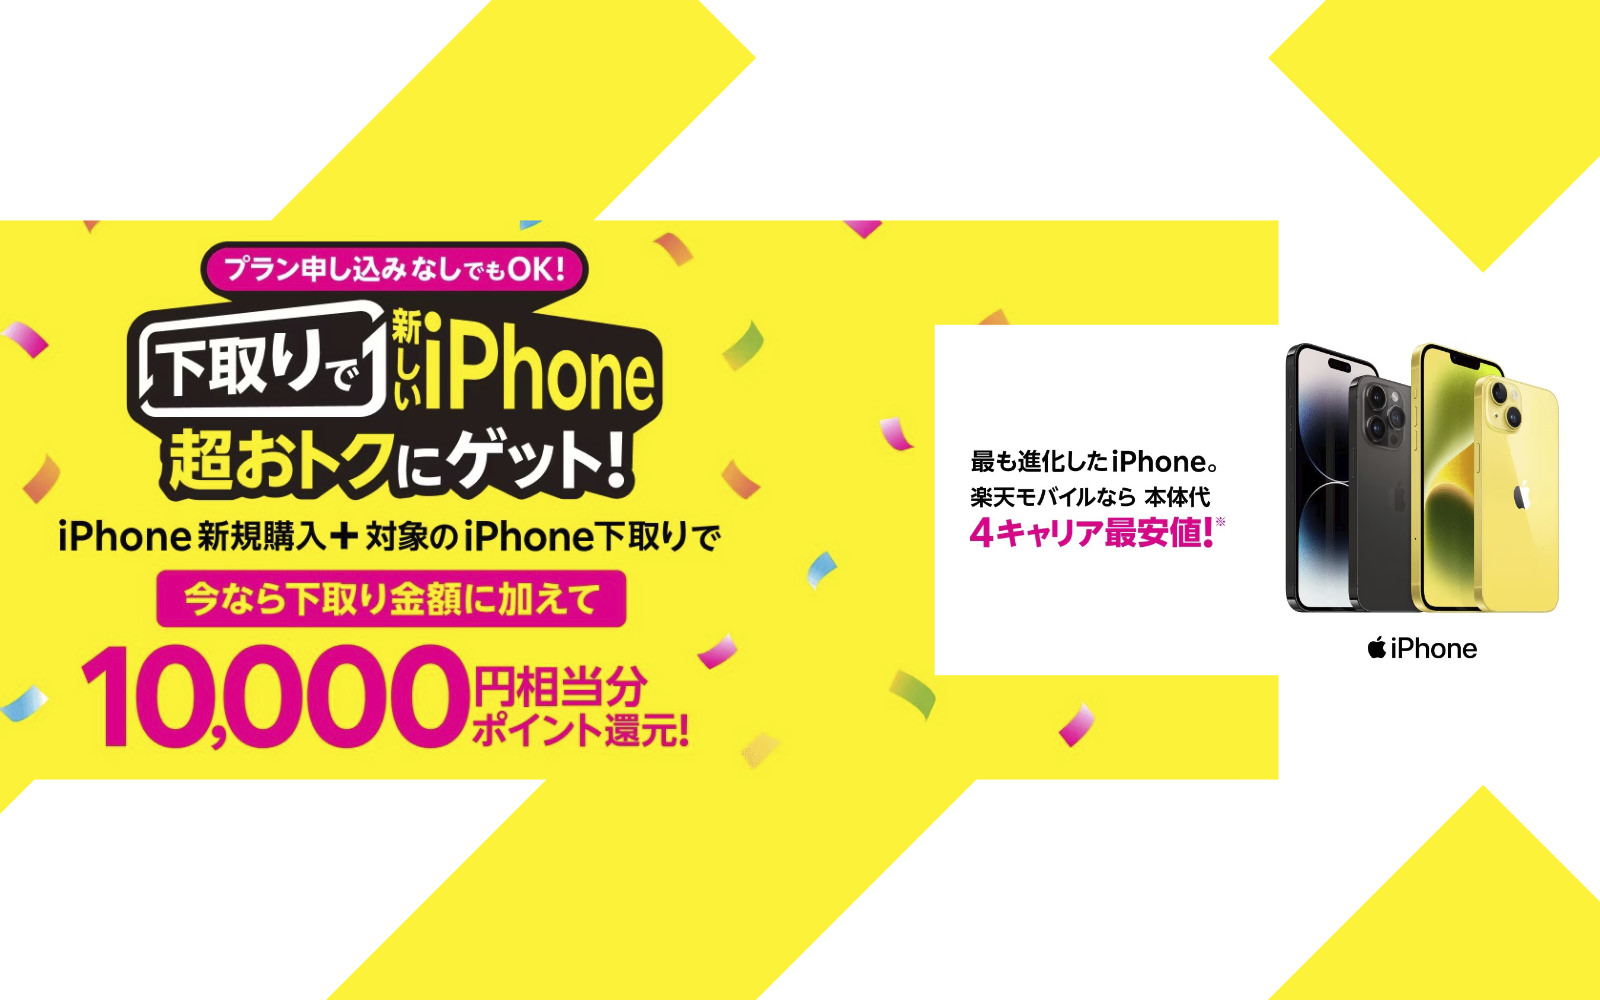 Rakuten iphone campaign ending soon